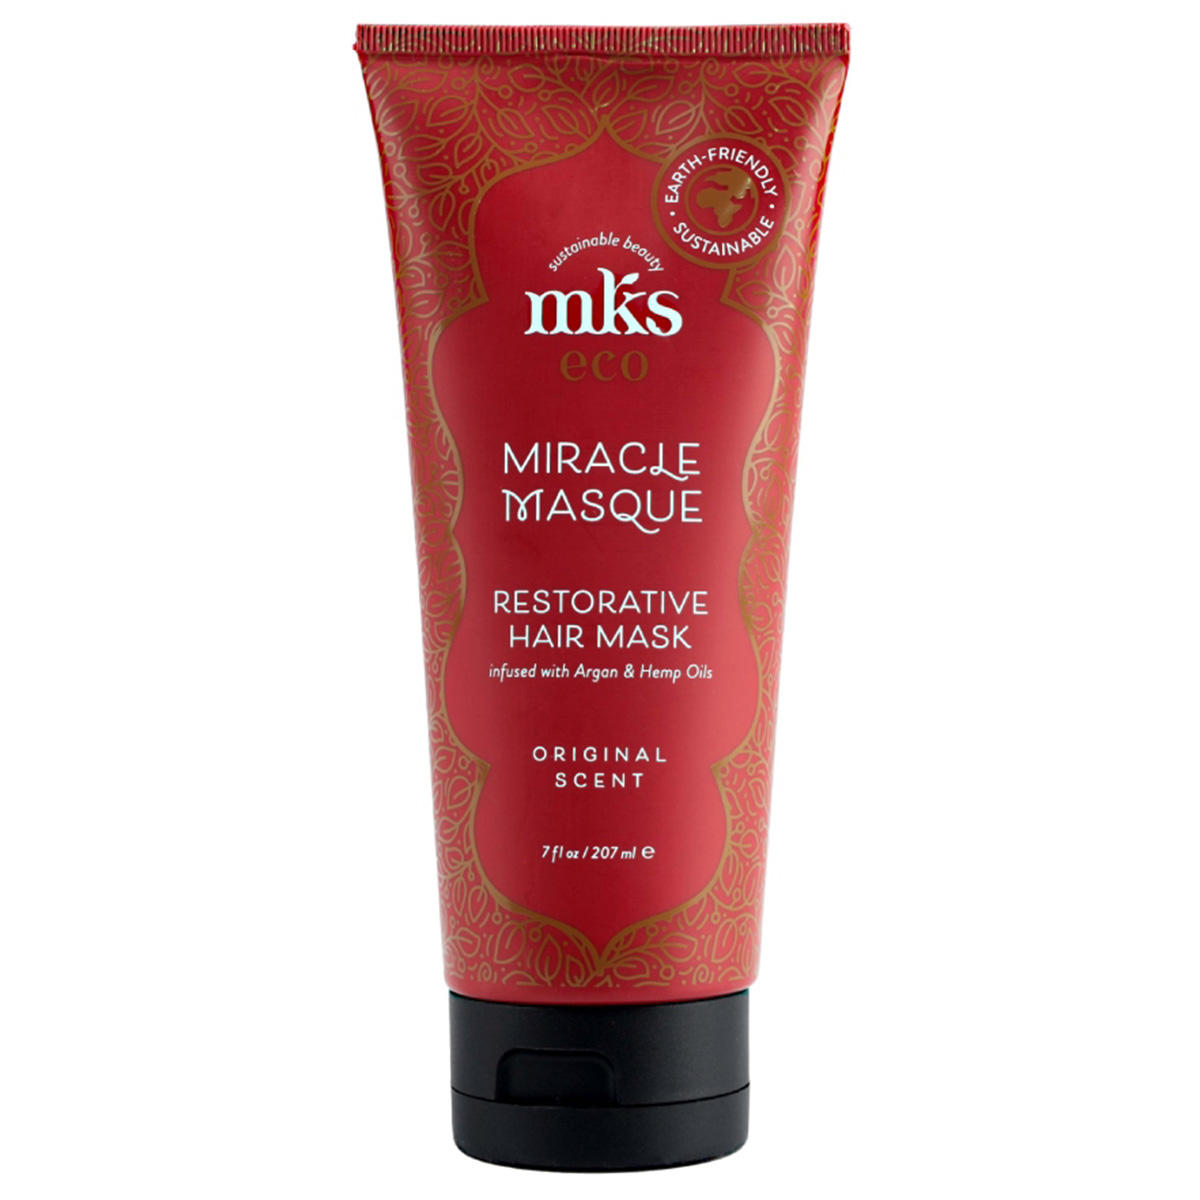 mks eco Mircale Masque Hair Mask Original 207 ml - 1